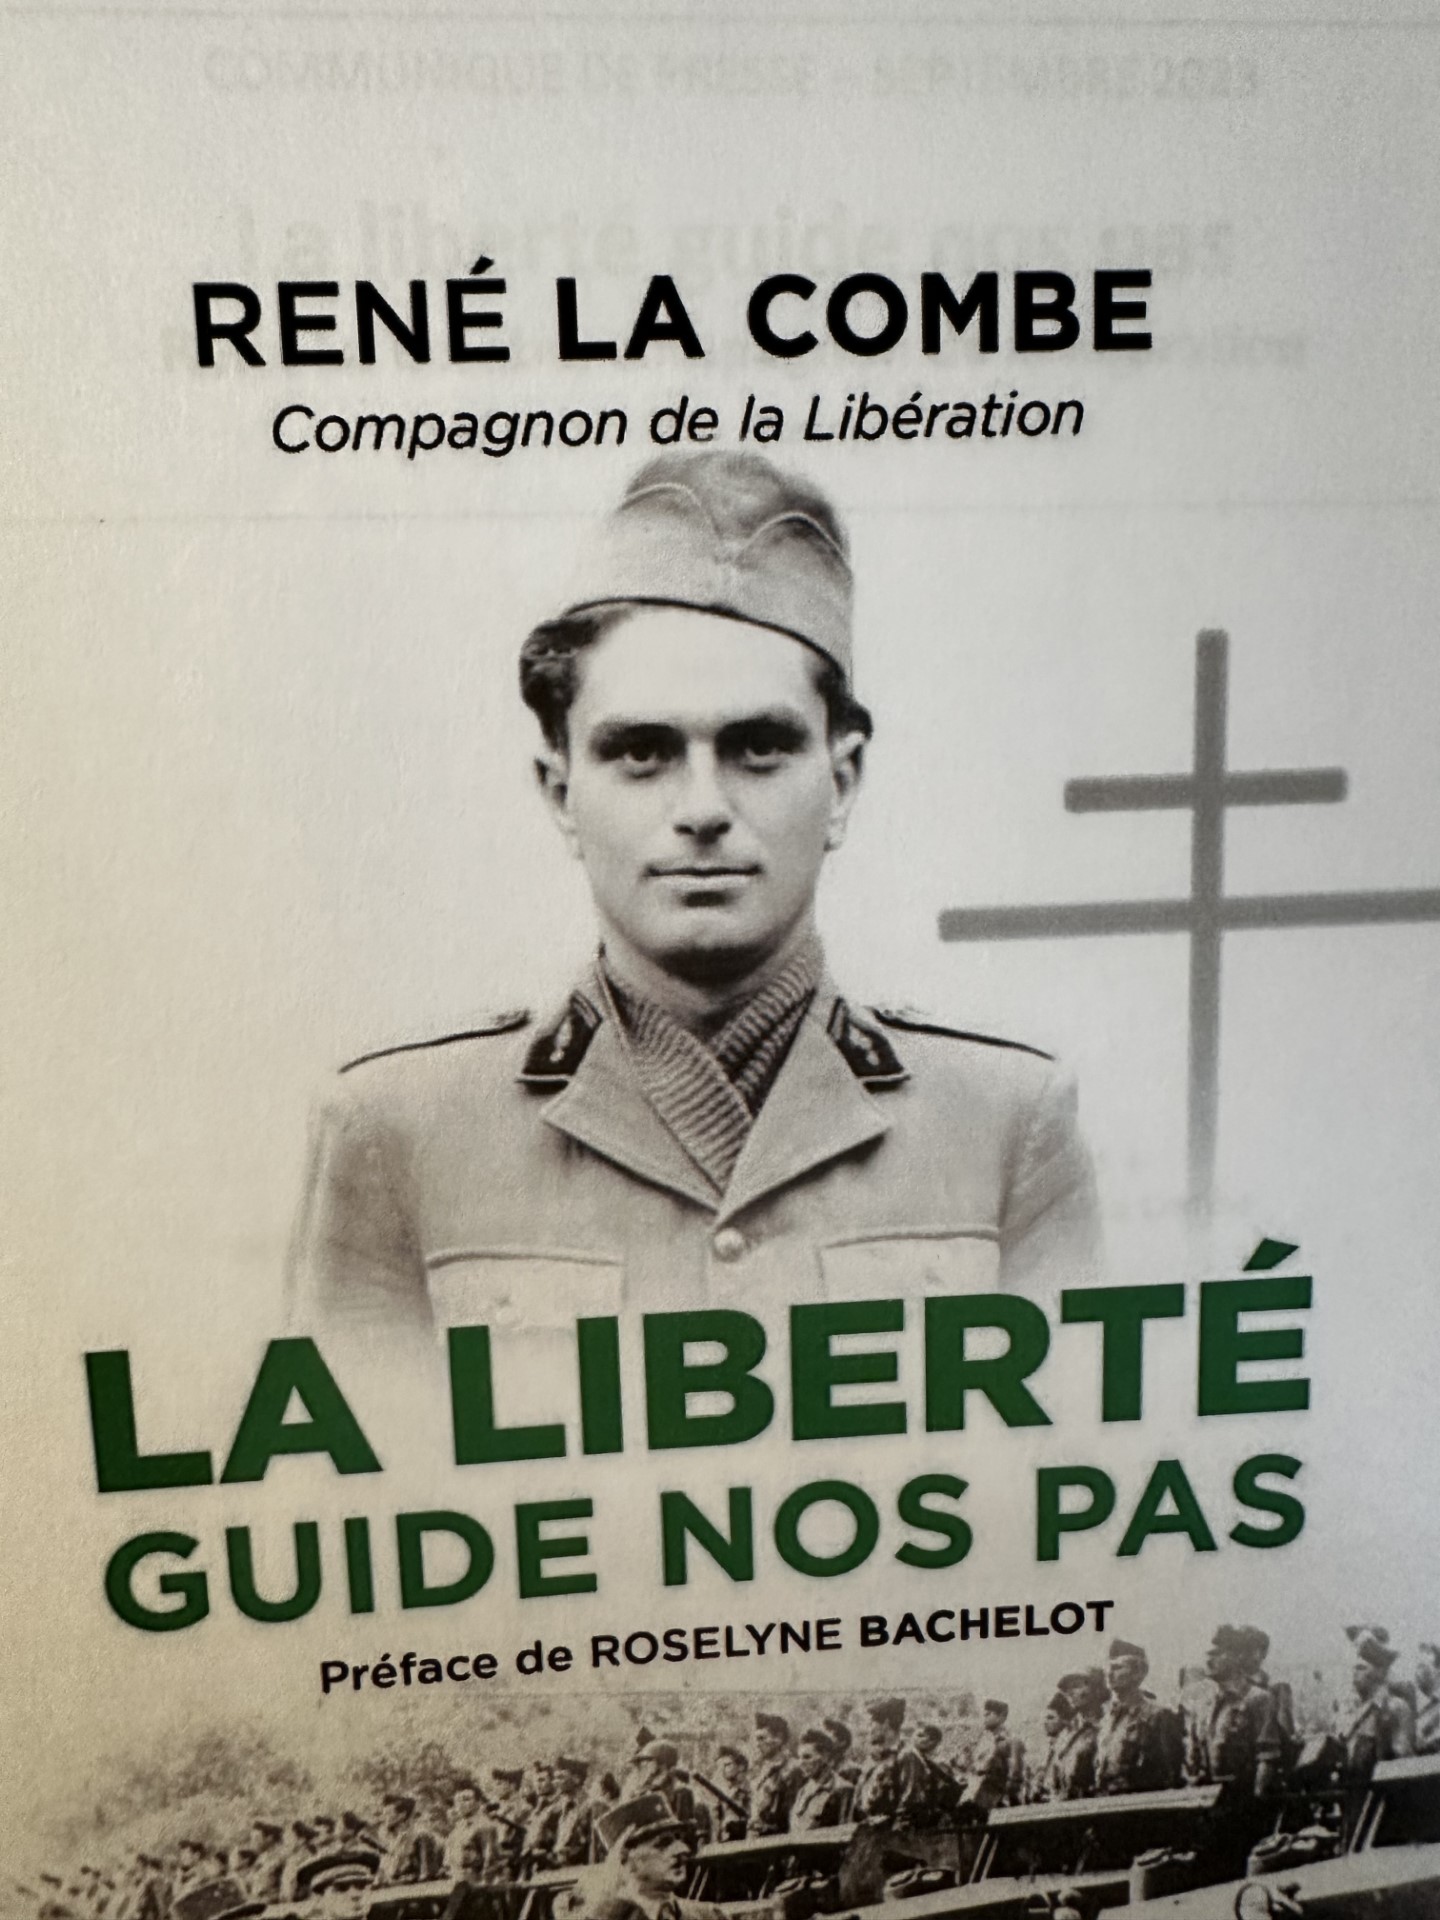 Témoignage du fils de René La Combe